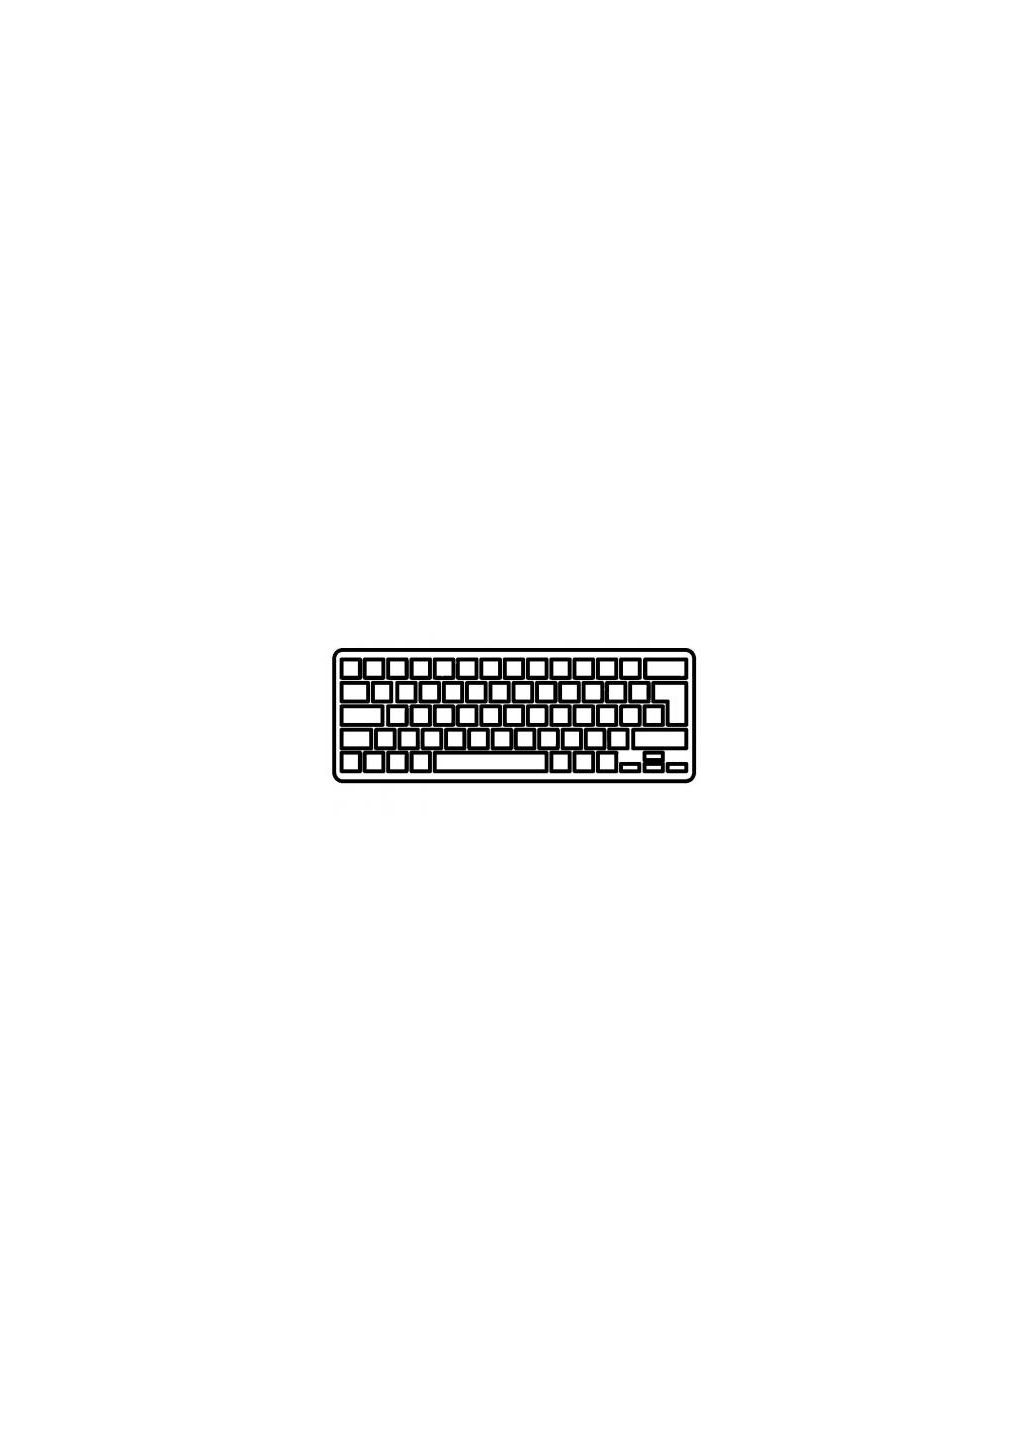 Клавиатура ноутбука (A43170) HP mini 2133/2140 series серебро ru (276706692)